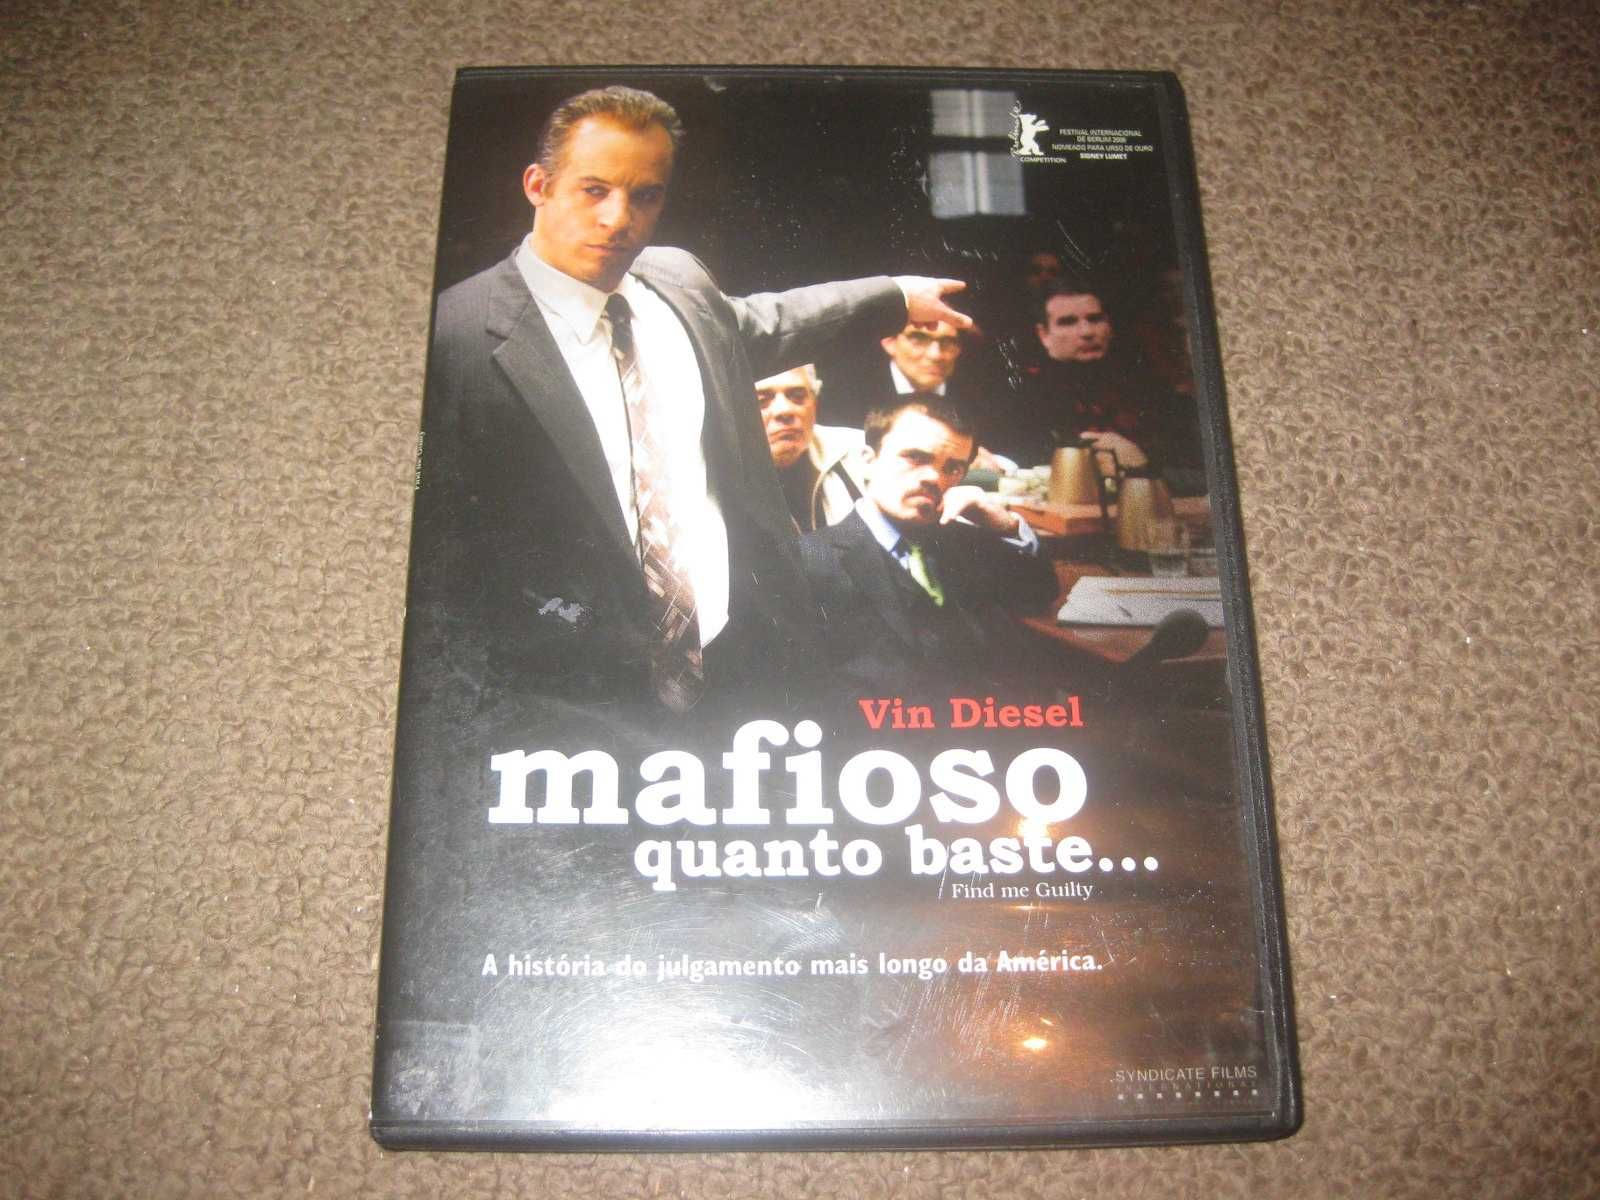 DVD "Mafioso Quanto Baste..." com Vin Diesel